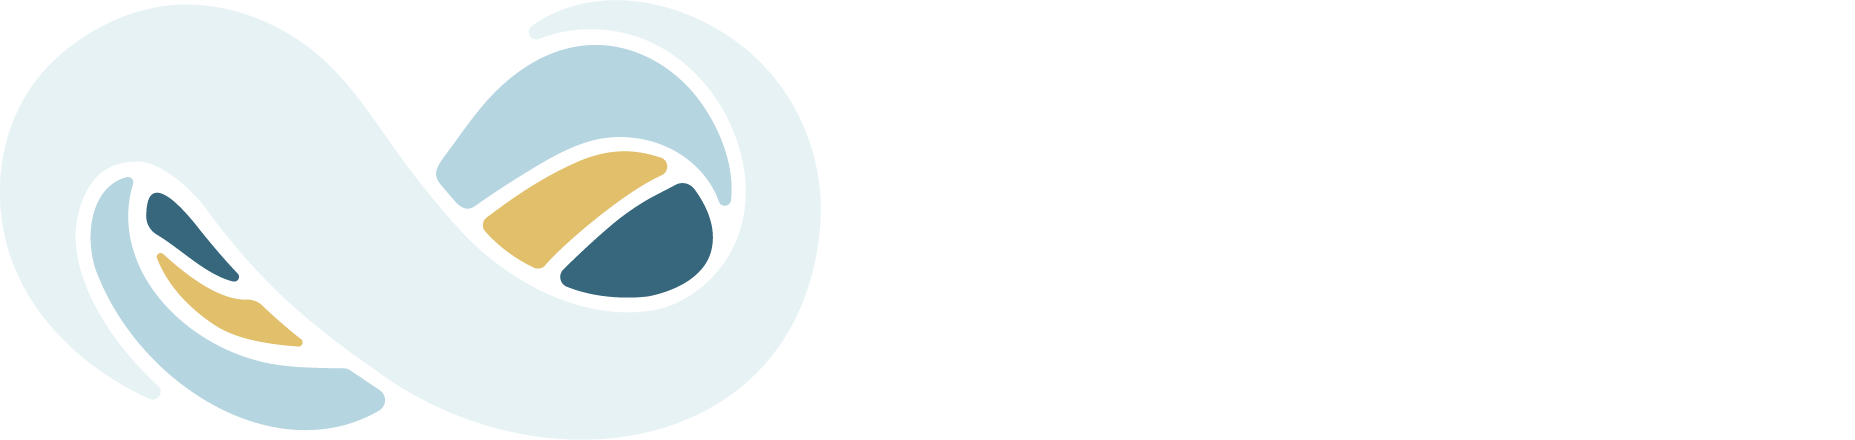 NetSuite-logo-half-blue